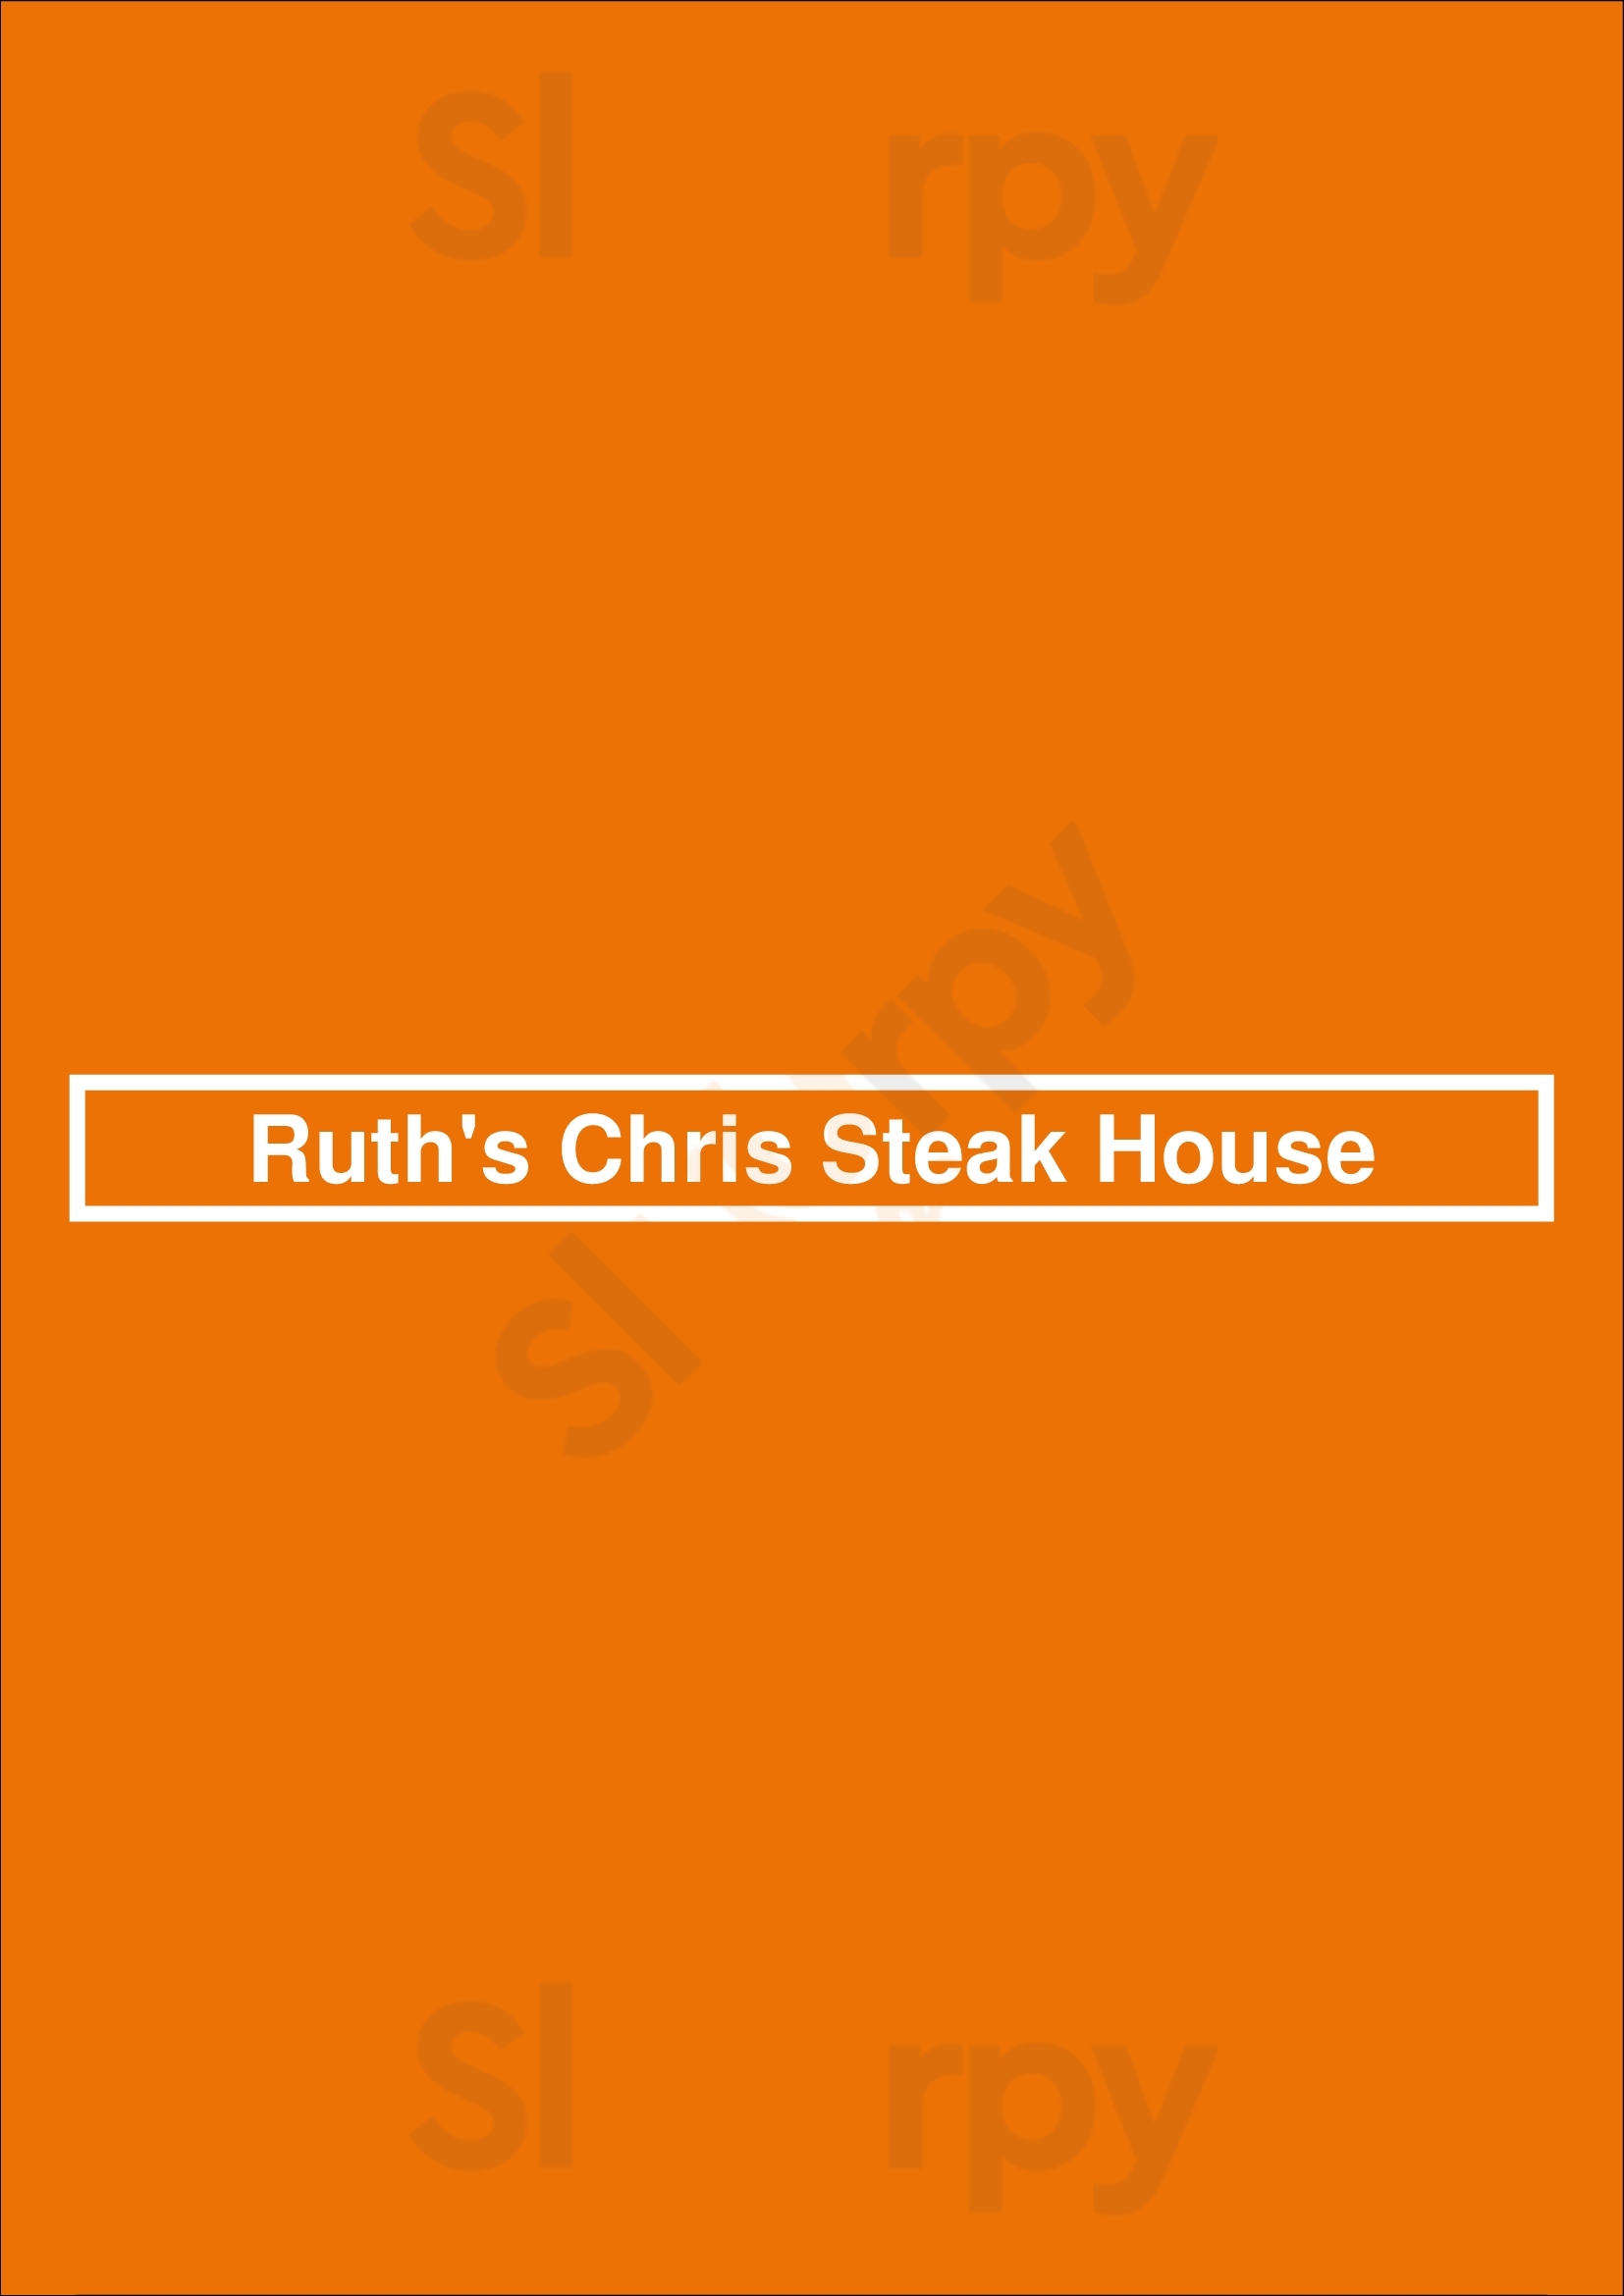 Ruth's Chris Steak House Wilmington Menu - 1